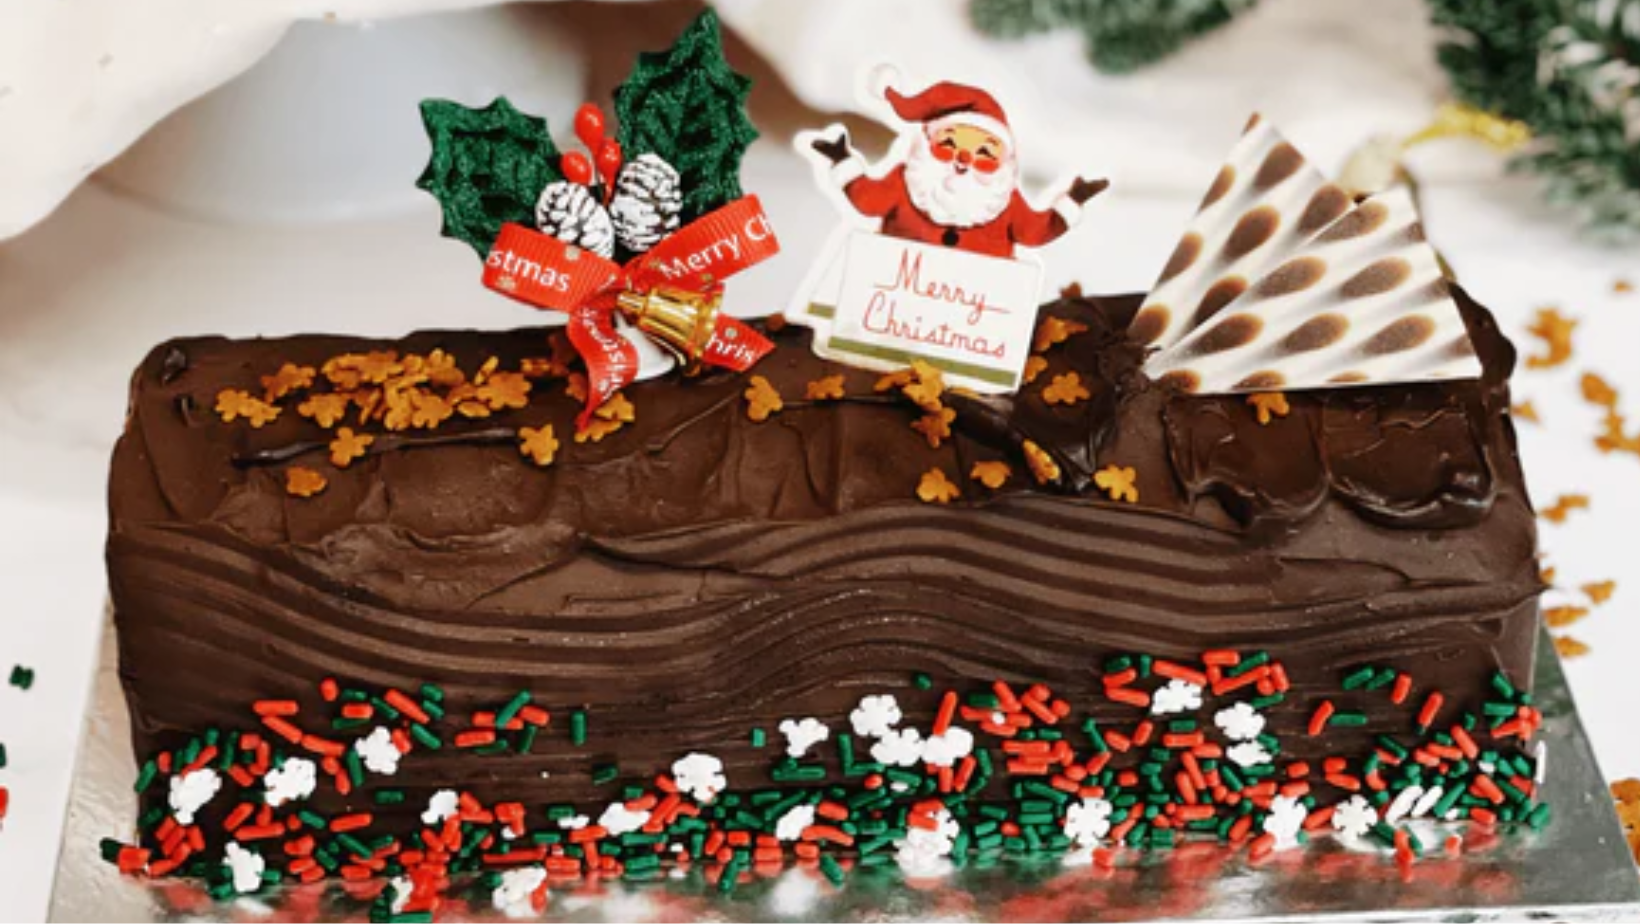 Tasty Treats for Special Season: Christmas Cakes from Temptations Cakes